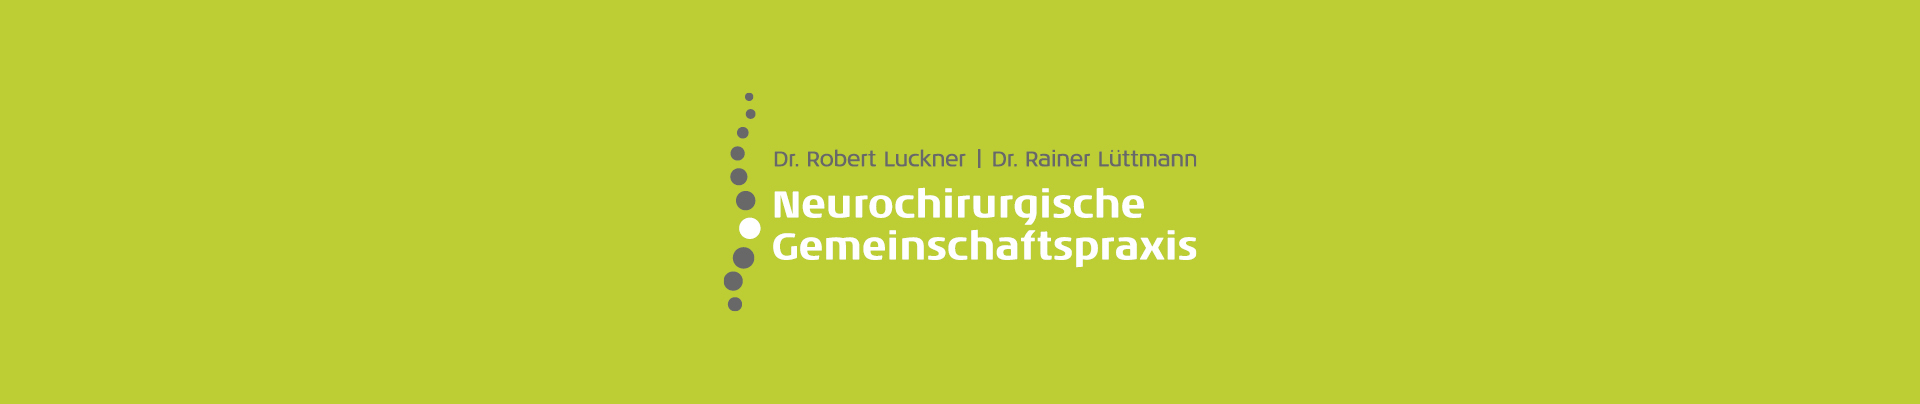 Impressum Dr. med. Robert Luckner & Dr. med. Rainer Lüttmann